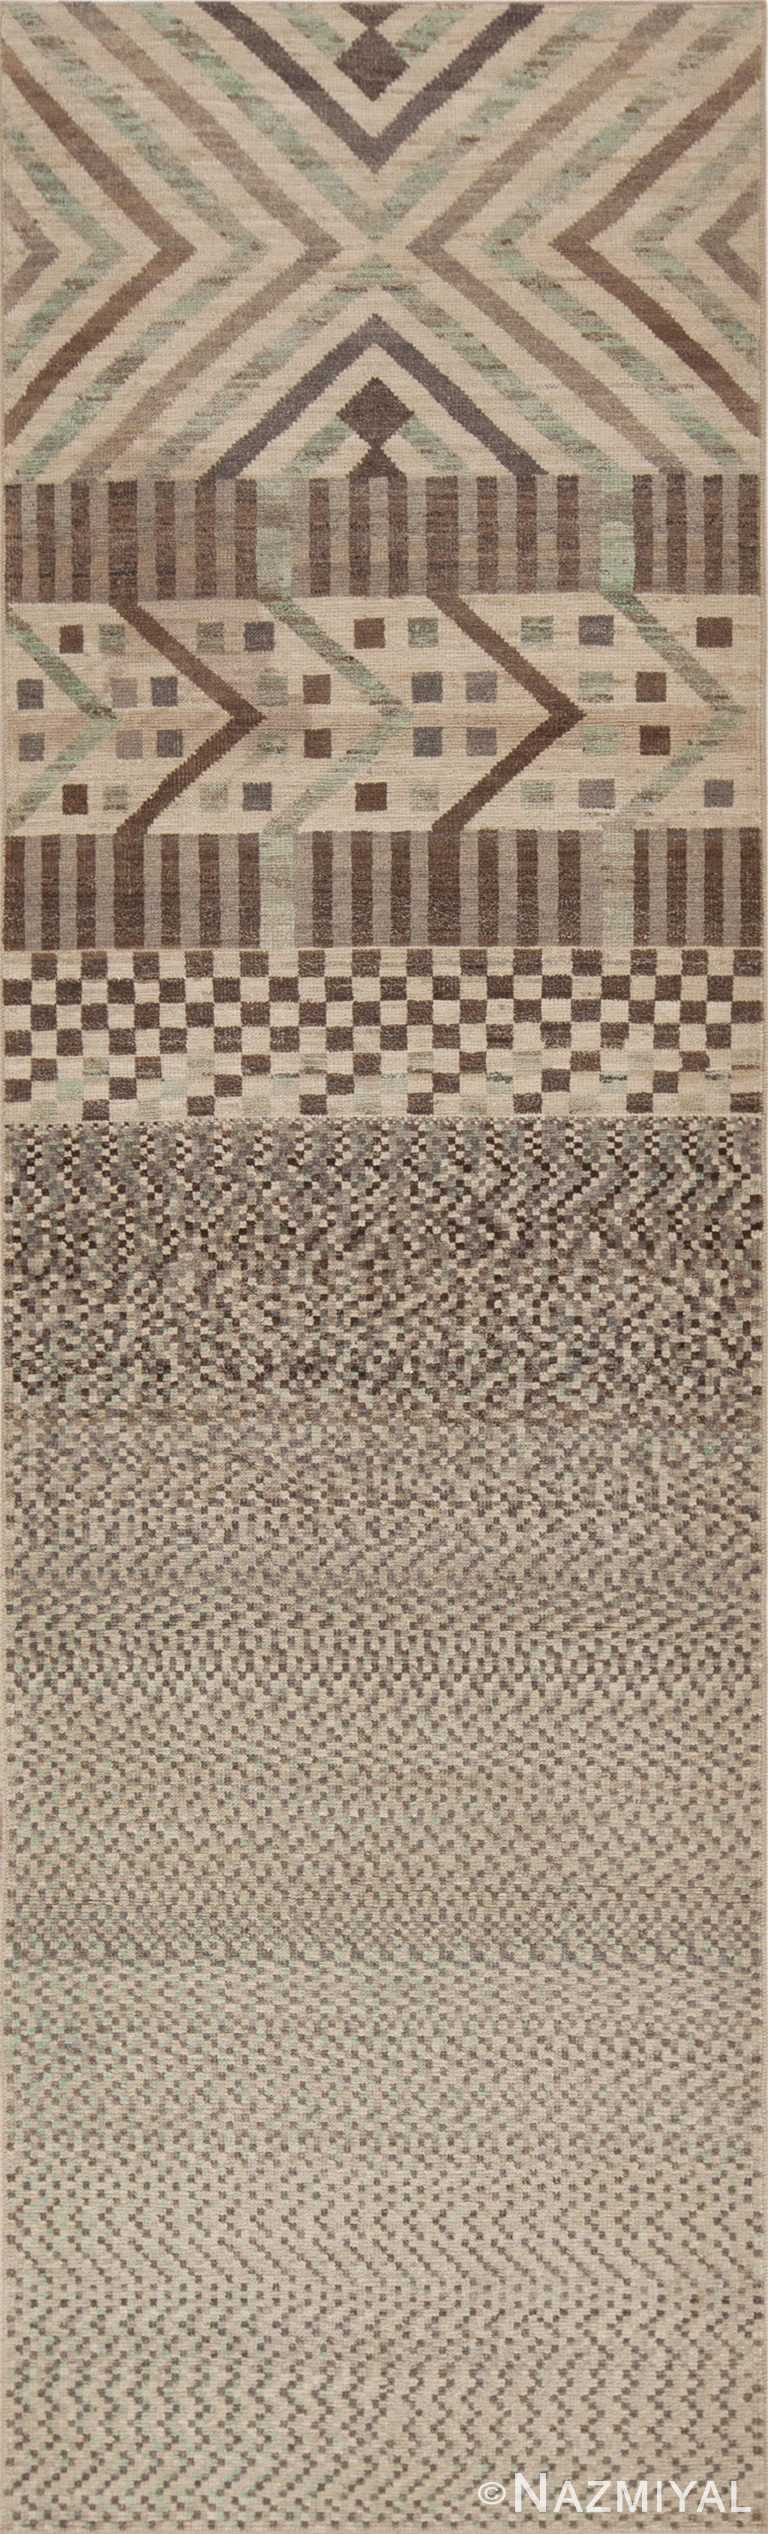 Artistic Tribal Geometric Pattern Light Cream Neutral Color Modern Hallway Runner Rug 11154 by Nazmiyal Antique rugs